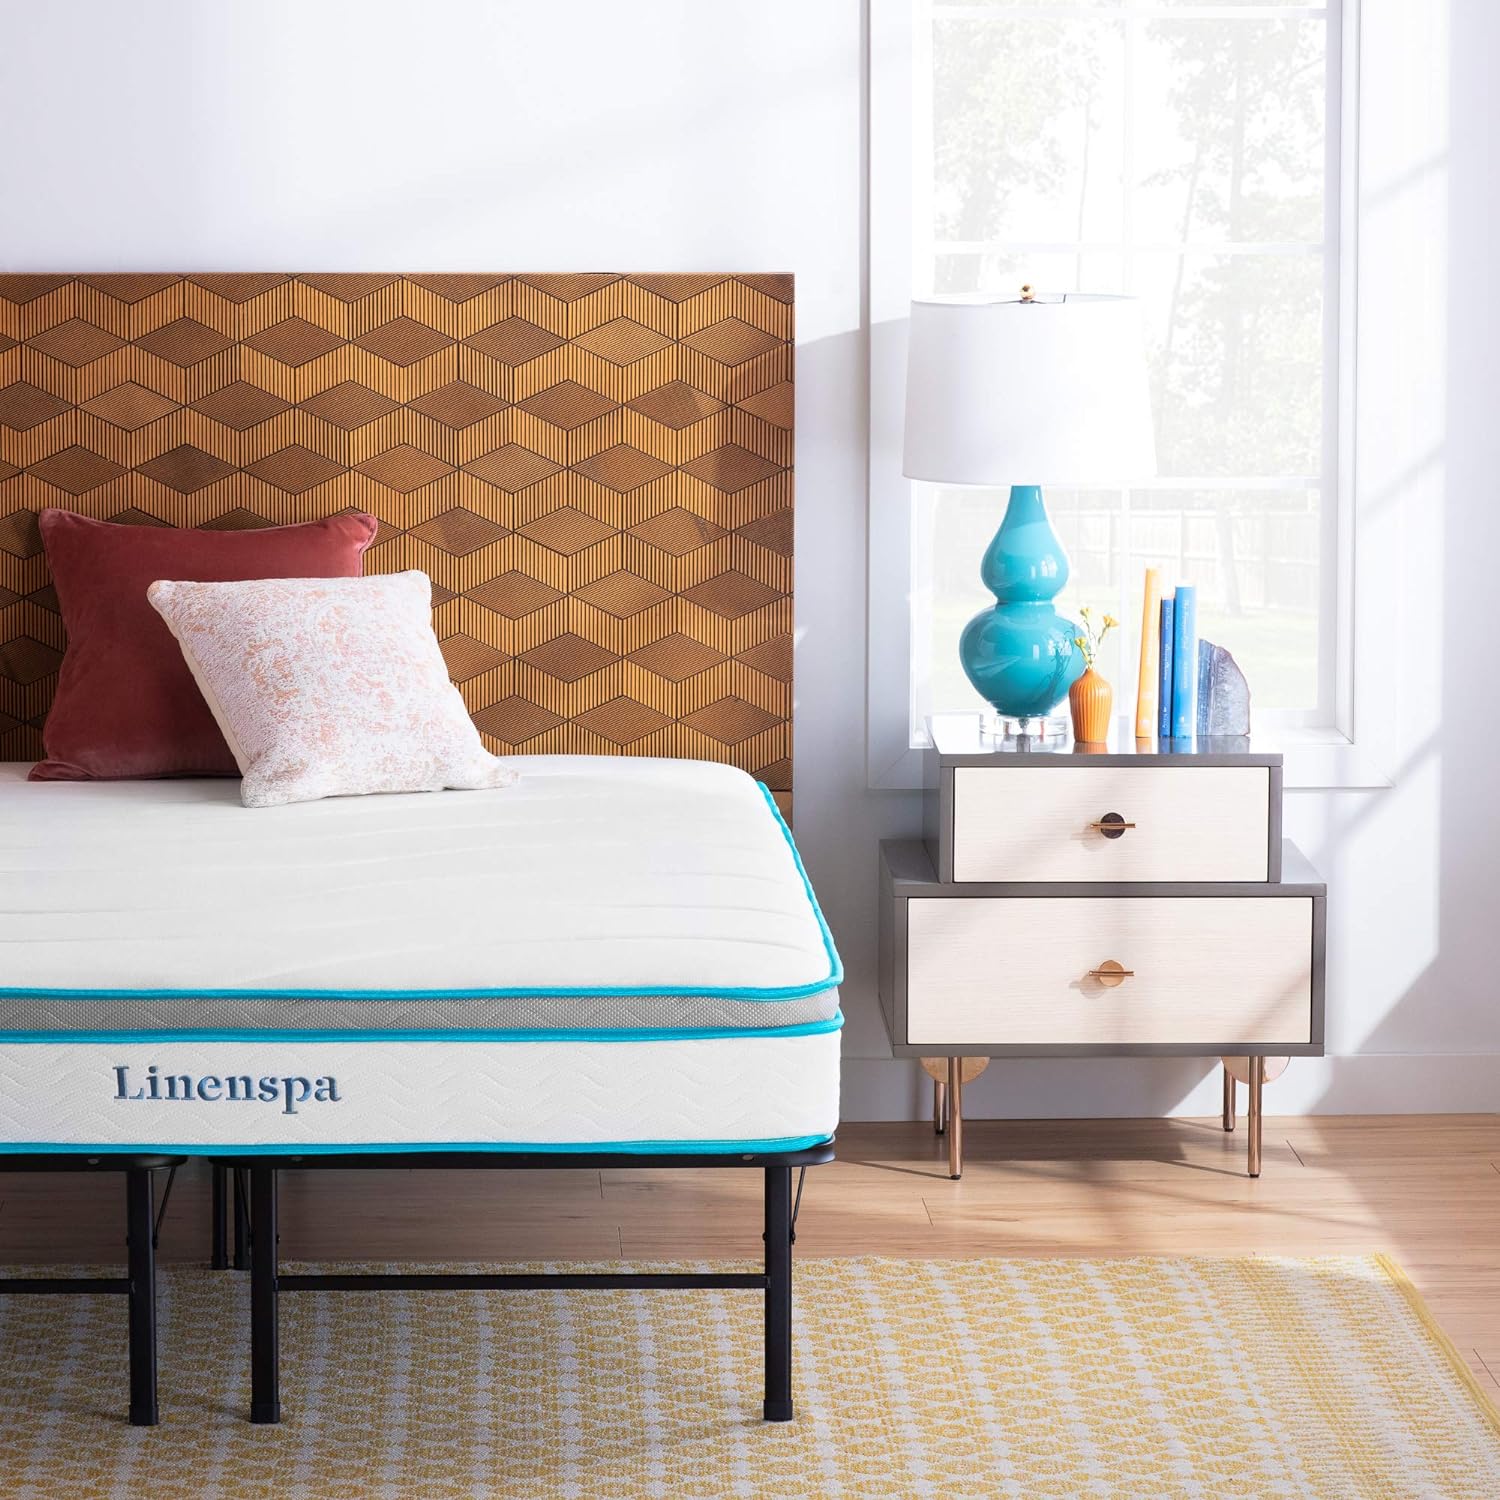 Linenspa 8 Inch Memory Foam and Spring Hybrid Mattress, Best Twin Mattress For Bunk Beds